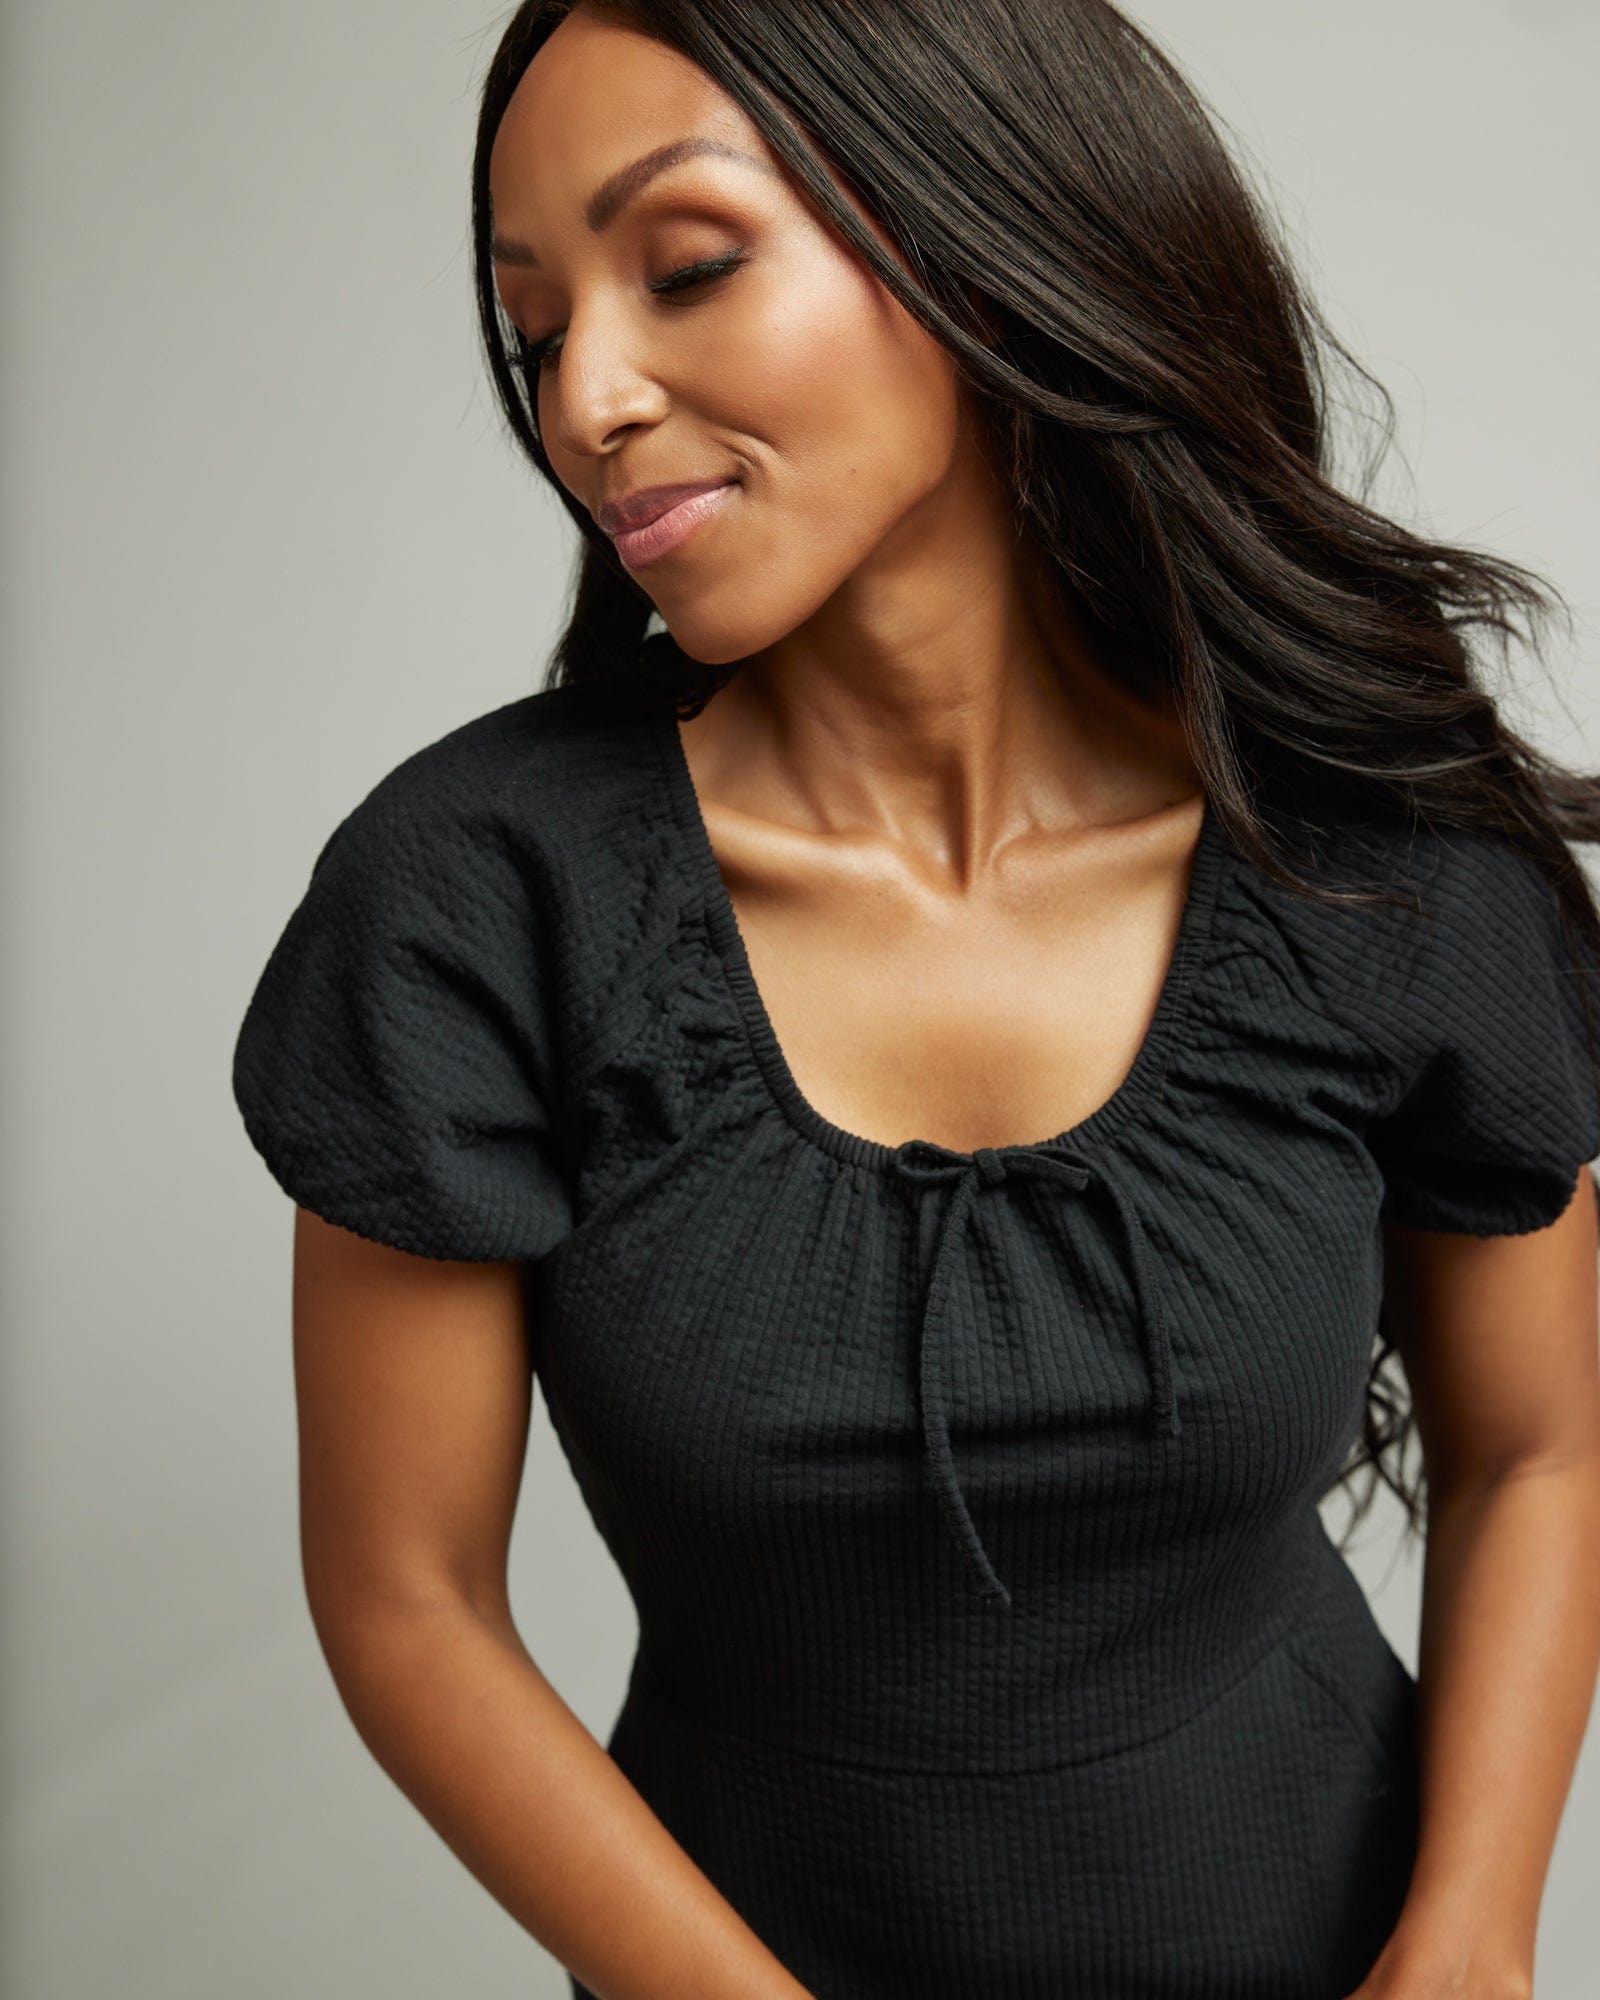 Woman in a short sleeve, knee-length, black dress